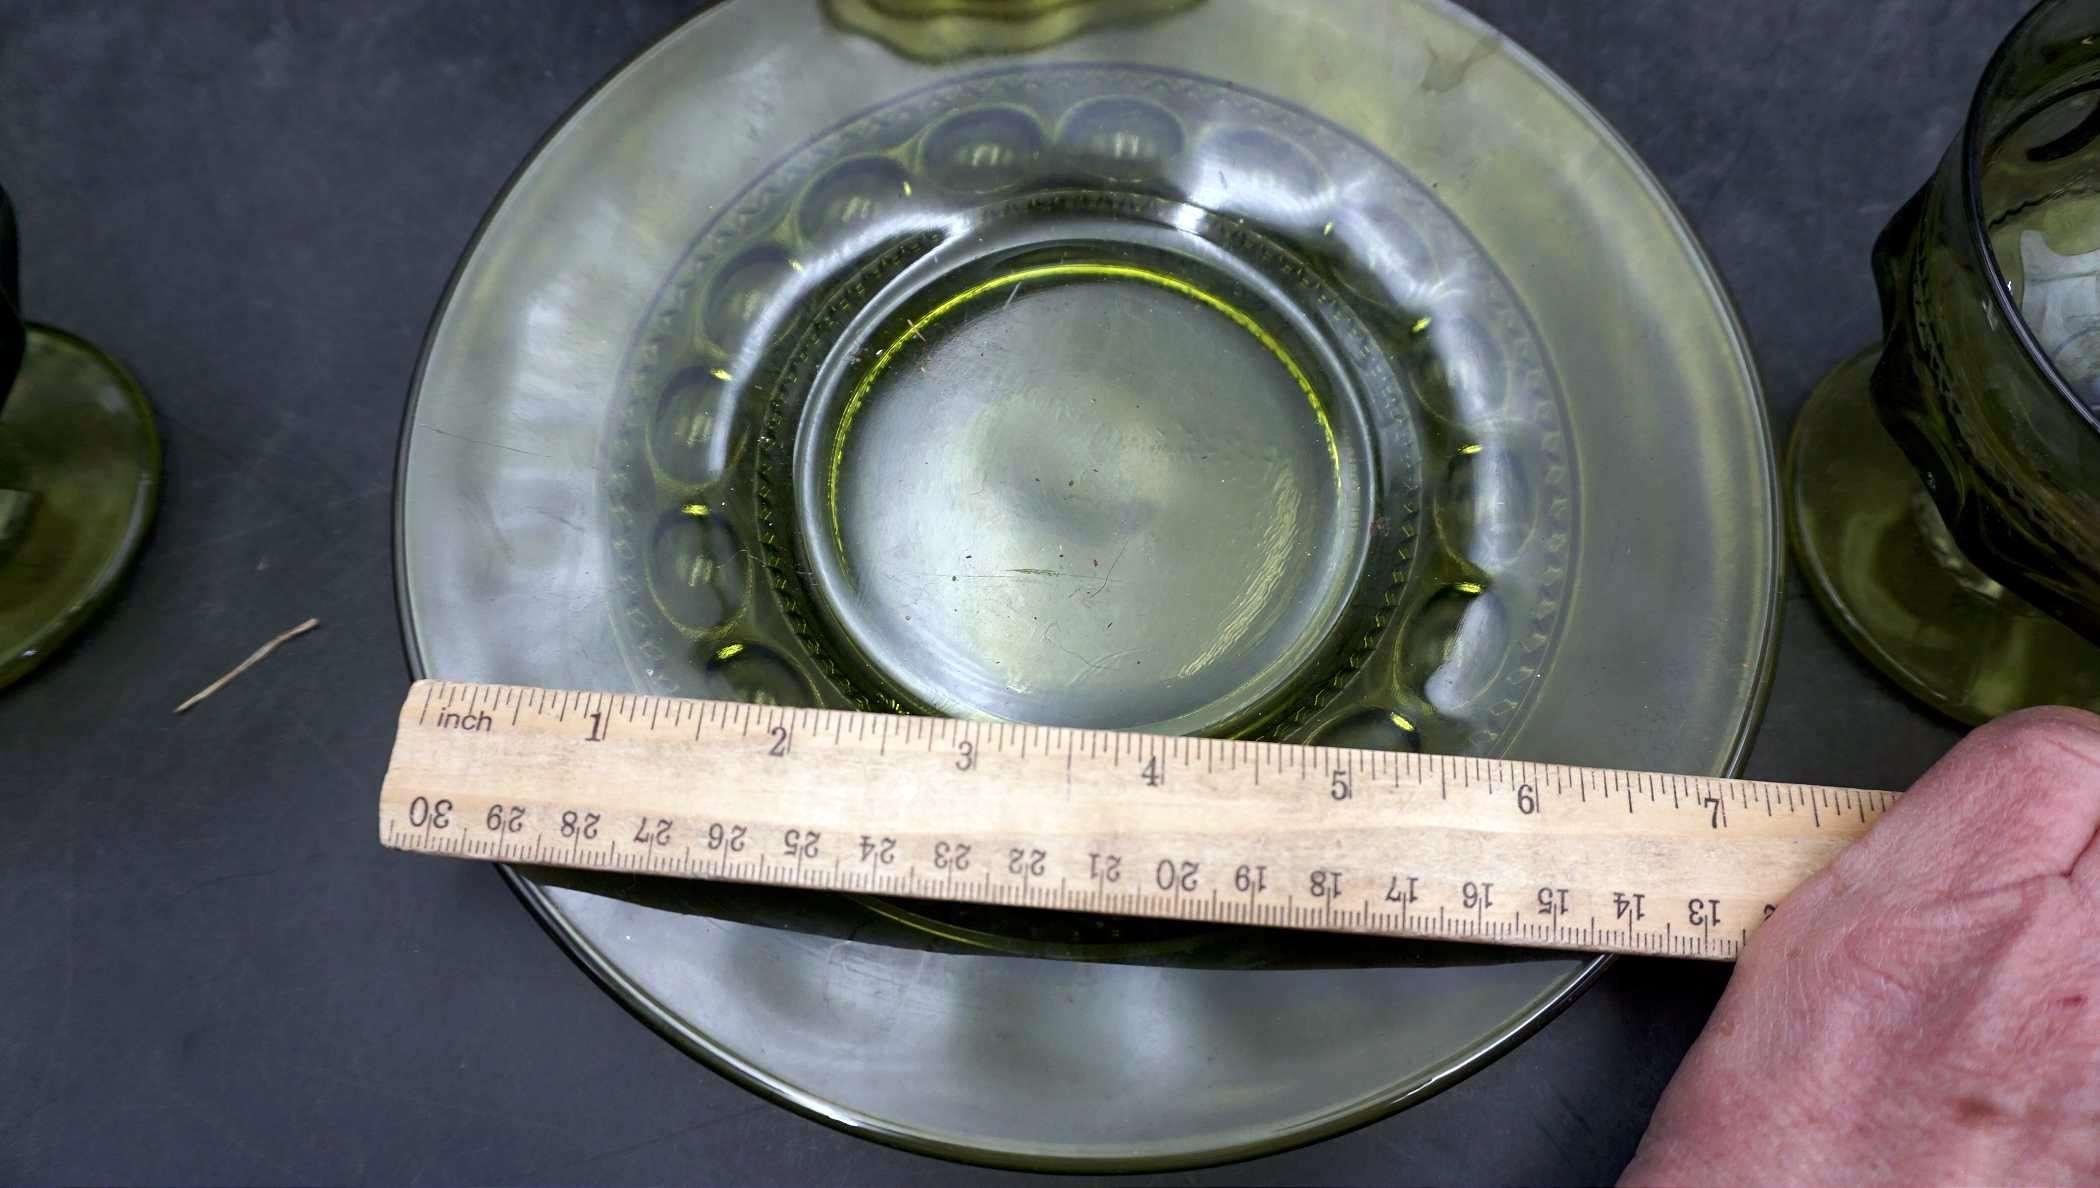 Green Glass Dish Set